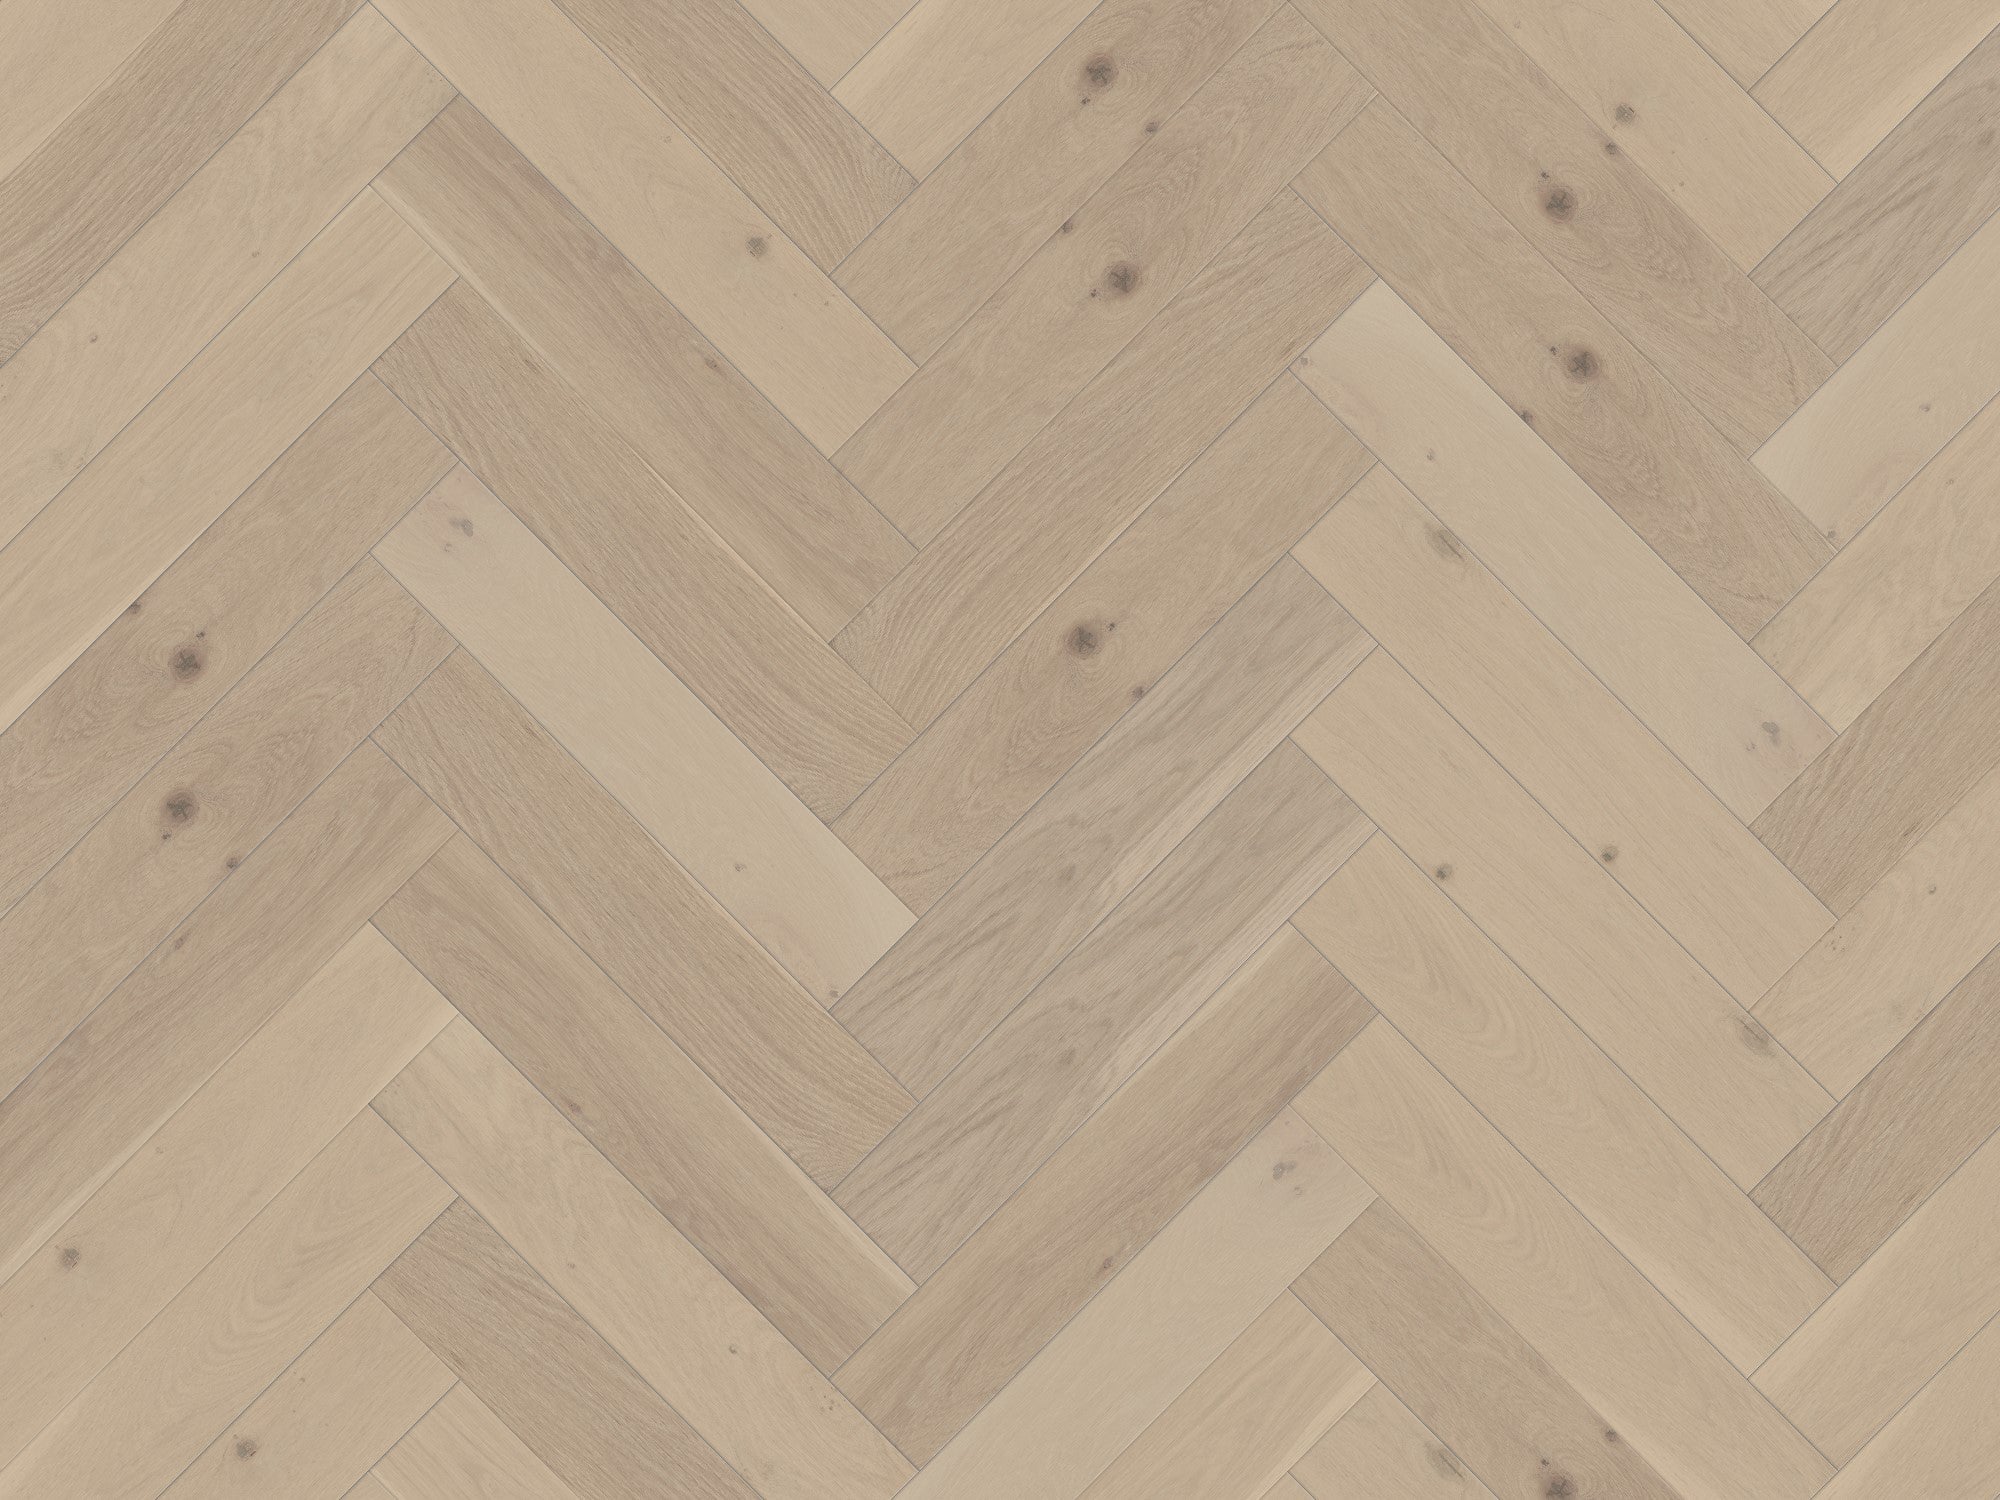 duchateau signature terra taiga herringbone european oak engineered hardnatural wood floor uv lacquer finish for interior use distributed by surface group international